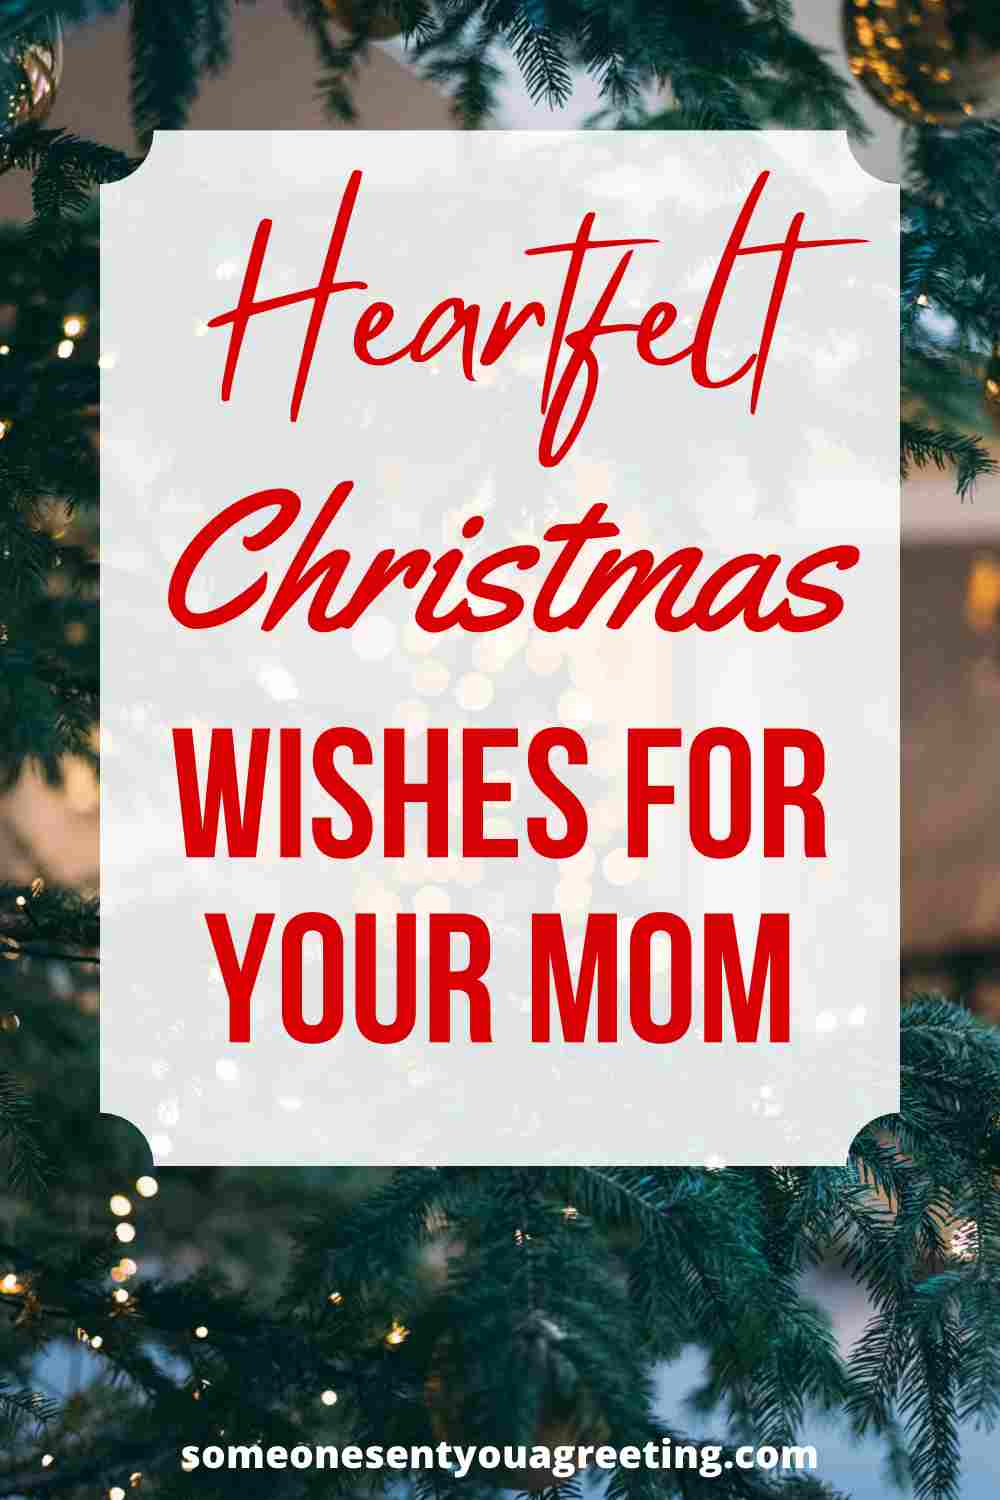 https://www.someonesentyouagreeting.com/wp-content/uploads/2022/09/christmas-wishes-for-mom.jpg